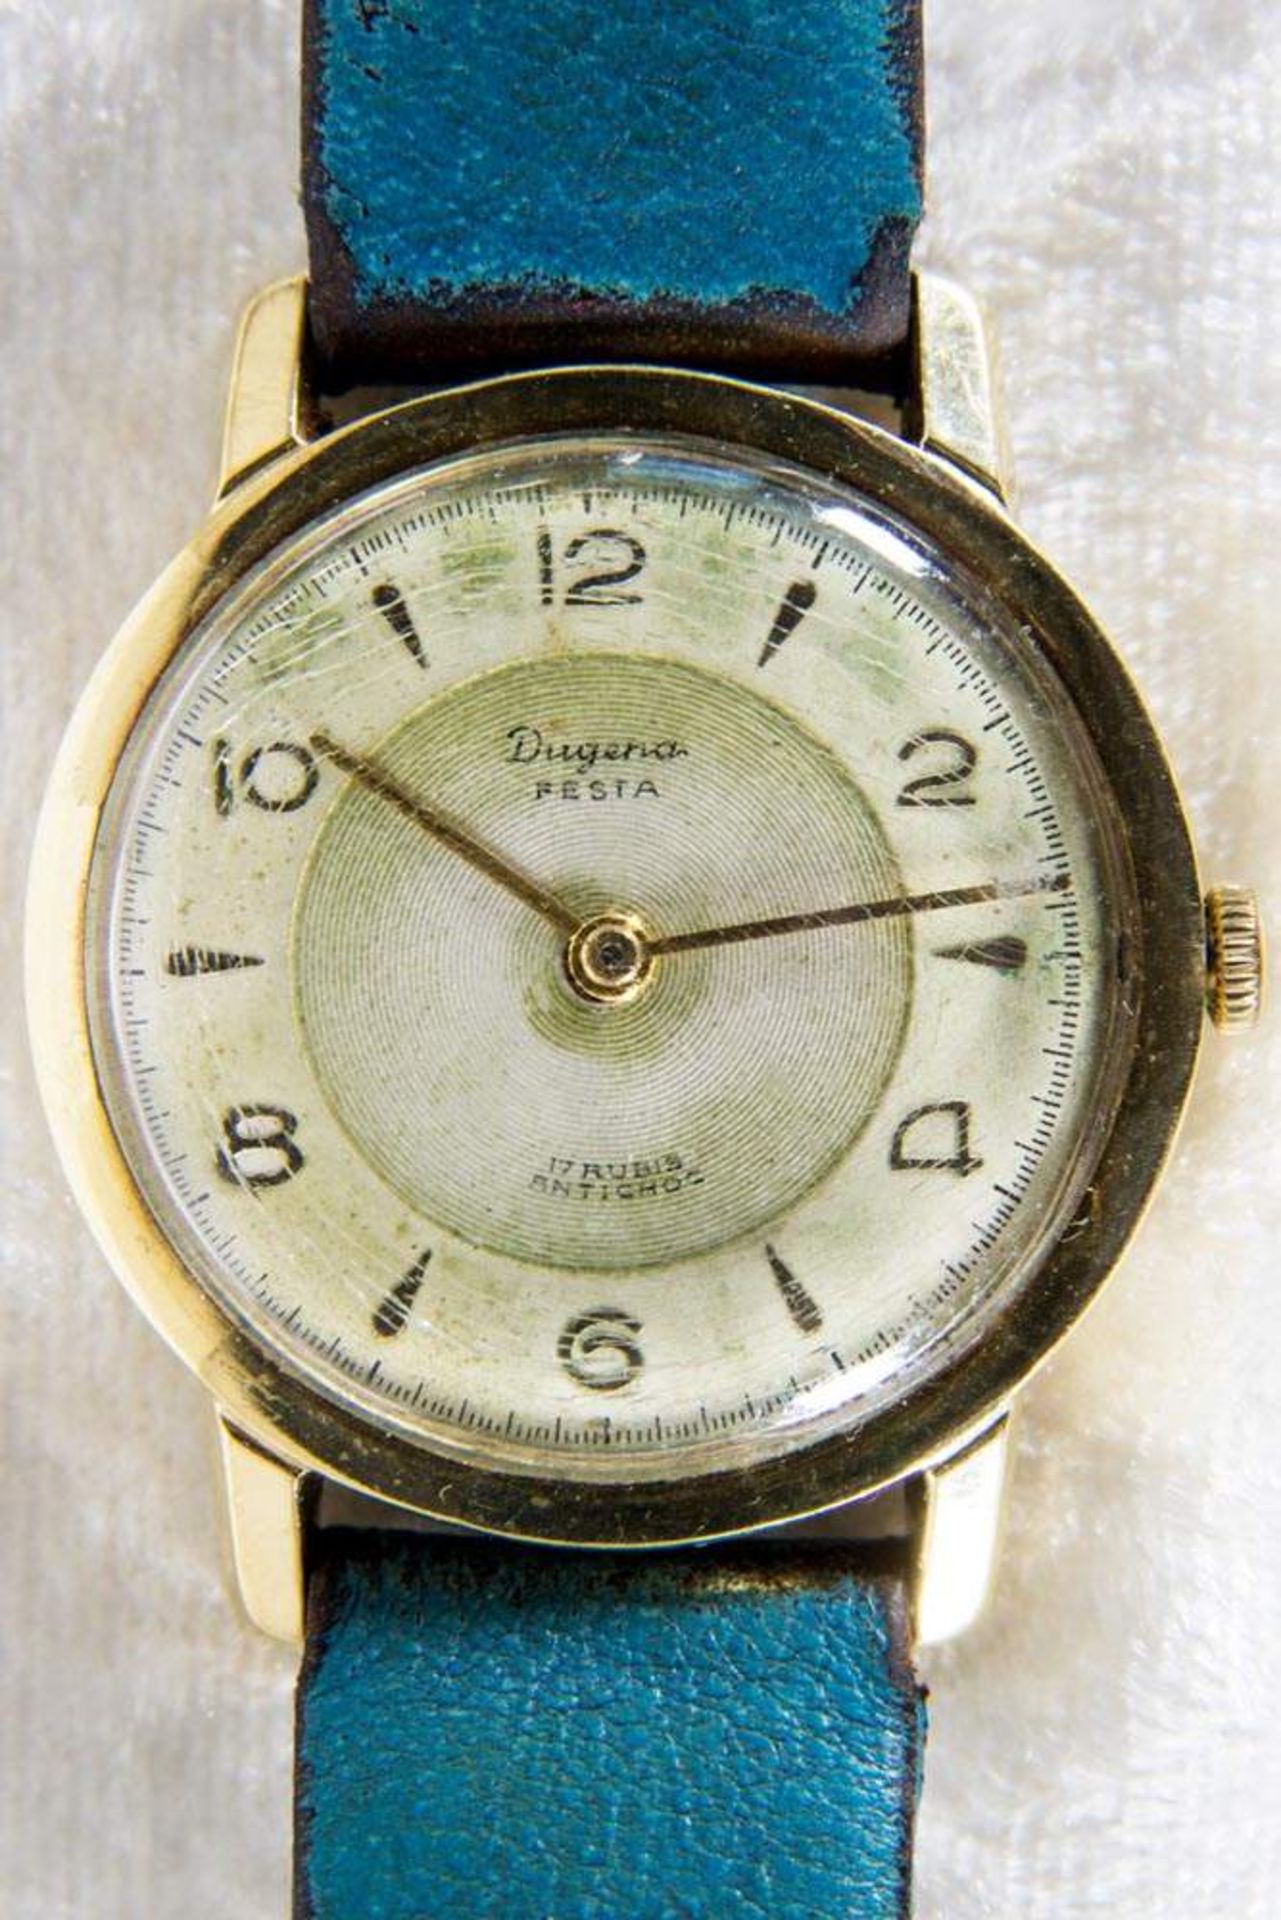 DEGENA Herrenarmbanduhr, funktionsloses Uhrwerk, 585er Gelbgoldgehäuse. Gehäusedurchmesser ca. 32